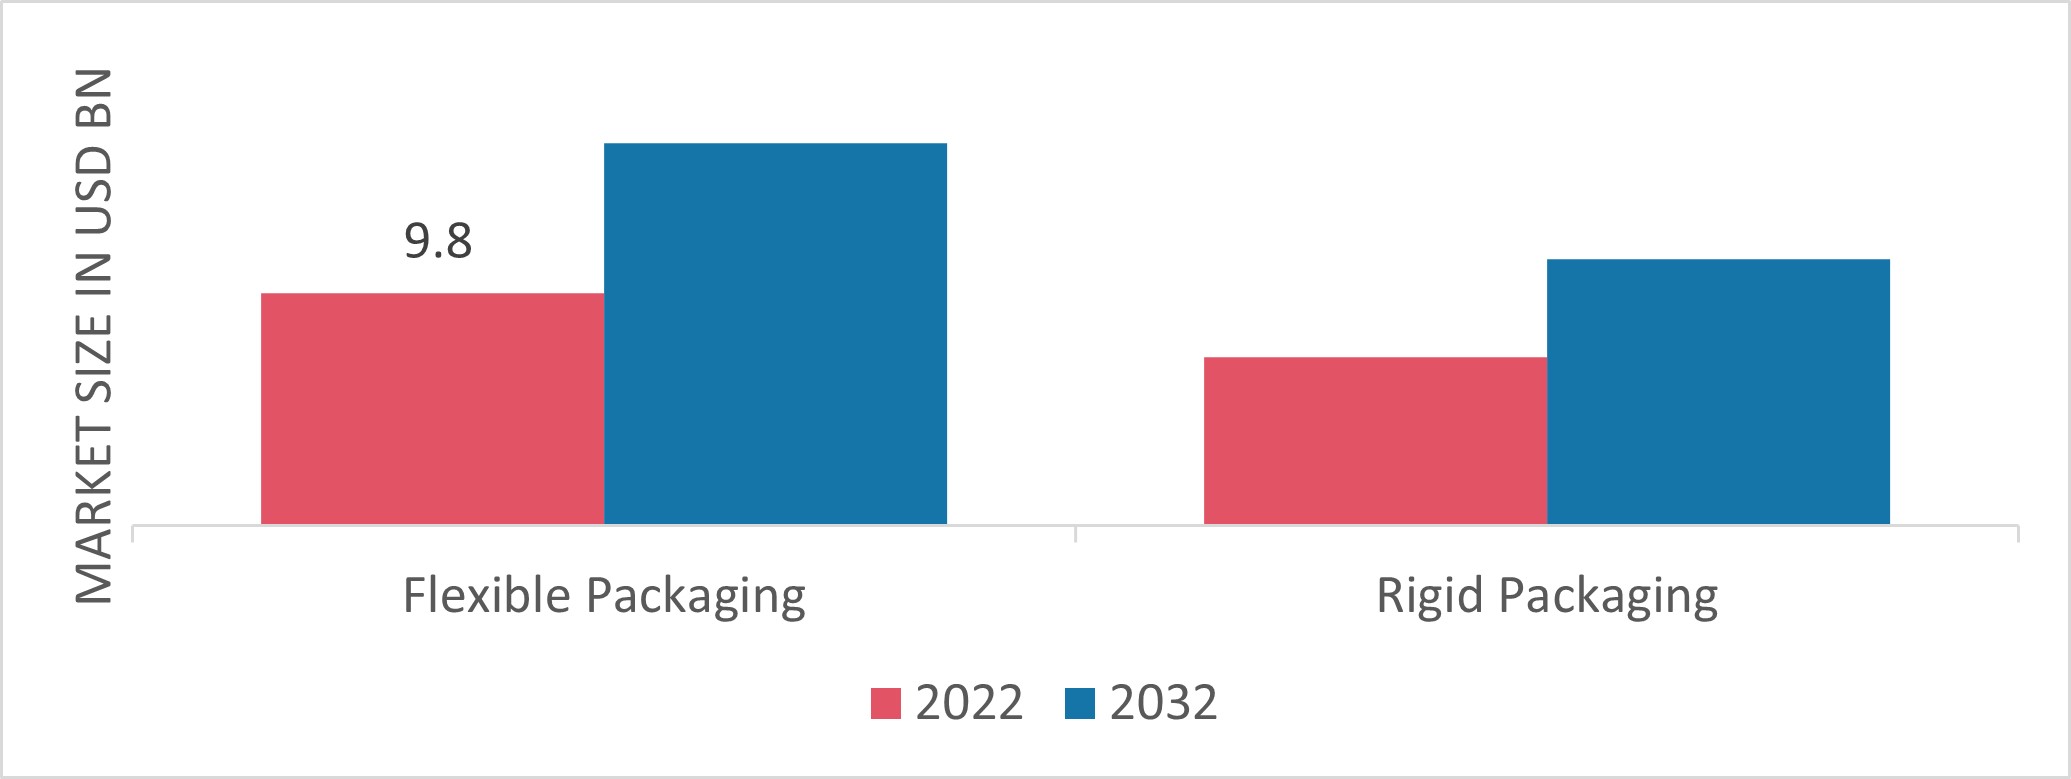 Snack Food Packaging Market, by Type, 2022 & 2032 (USD Billion)